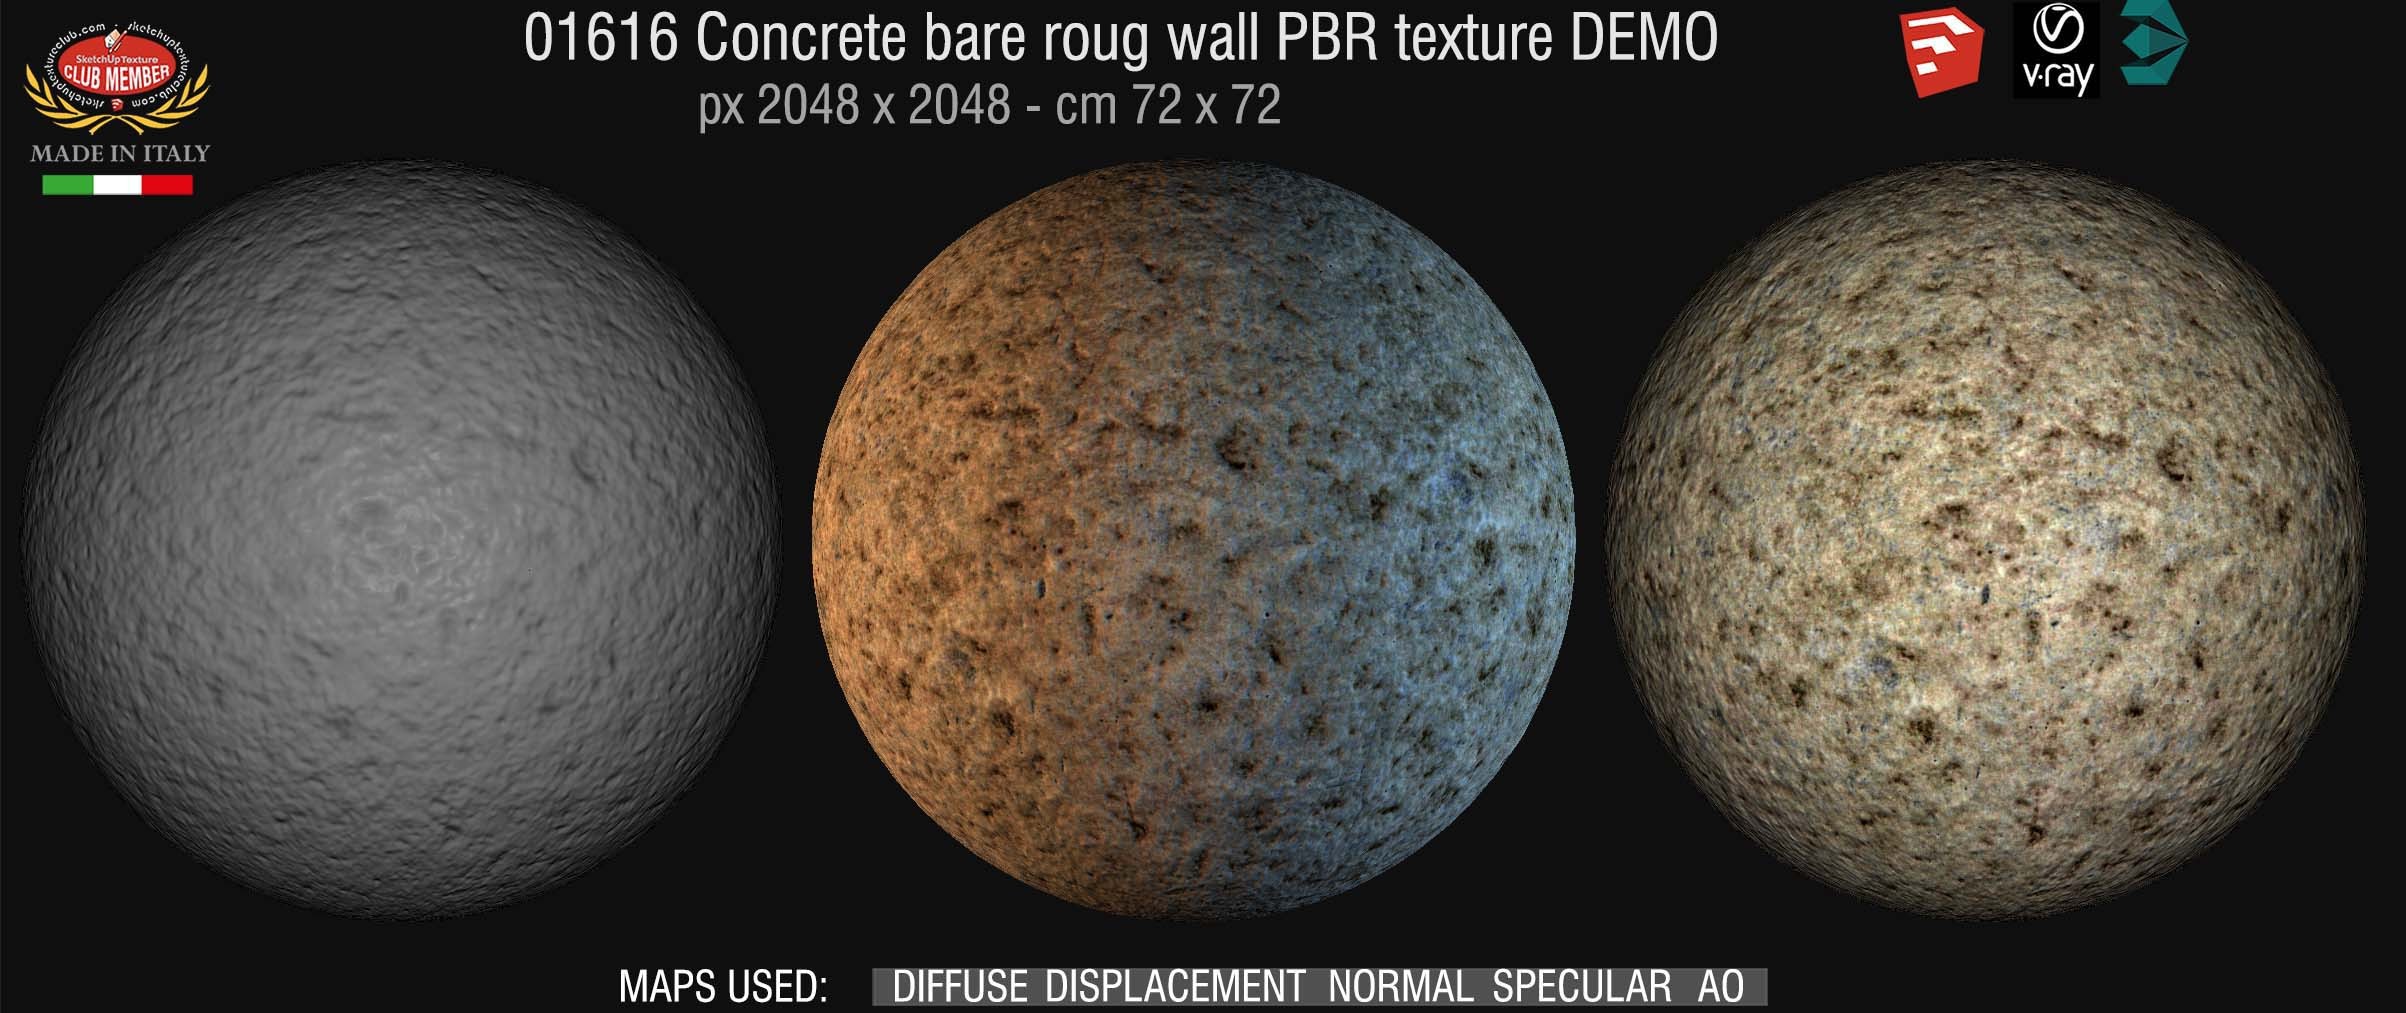 01616 Concrete bare rough wall PBR texture seamless DEMO